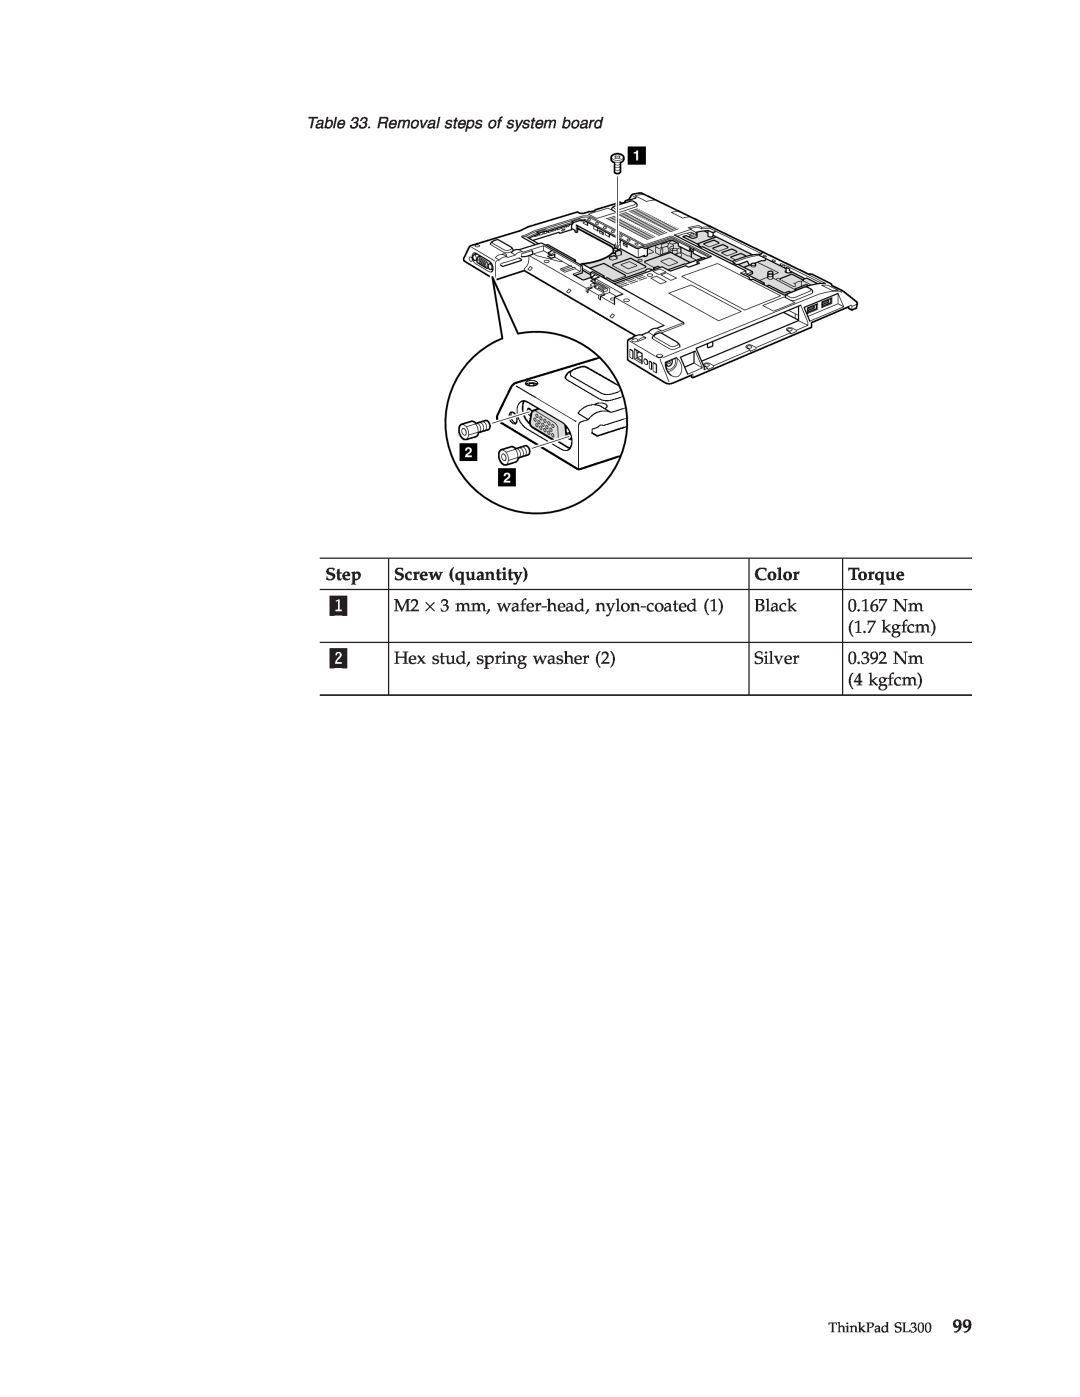 Lenovo manual Step, Screw quantity, Color, Torque, Removal steps of system board, ThinkPad SL300 